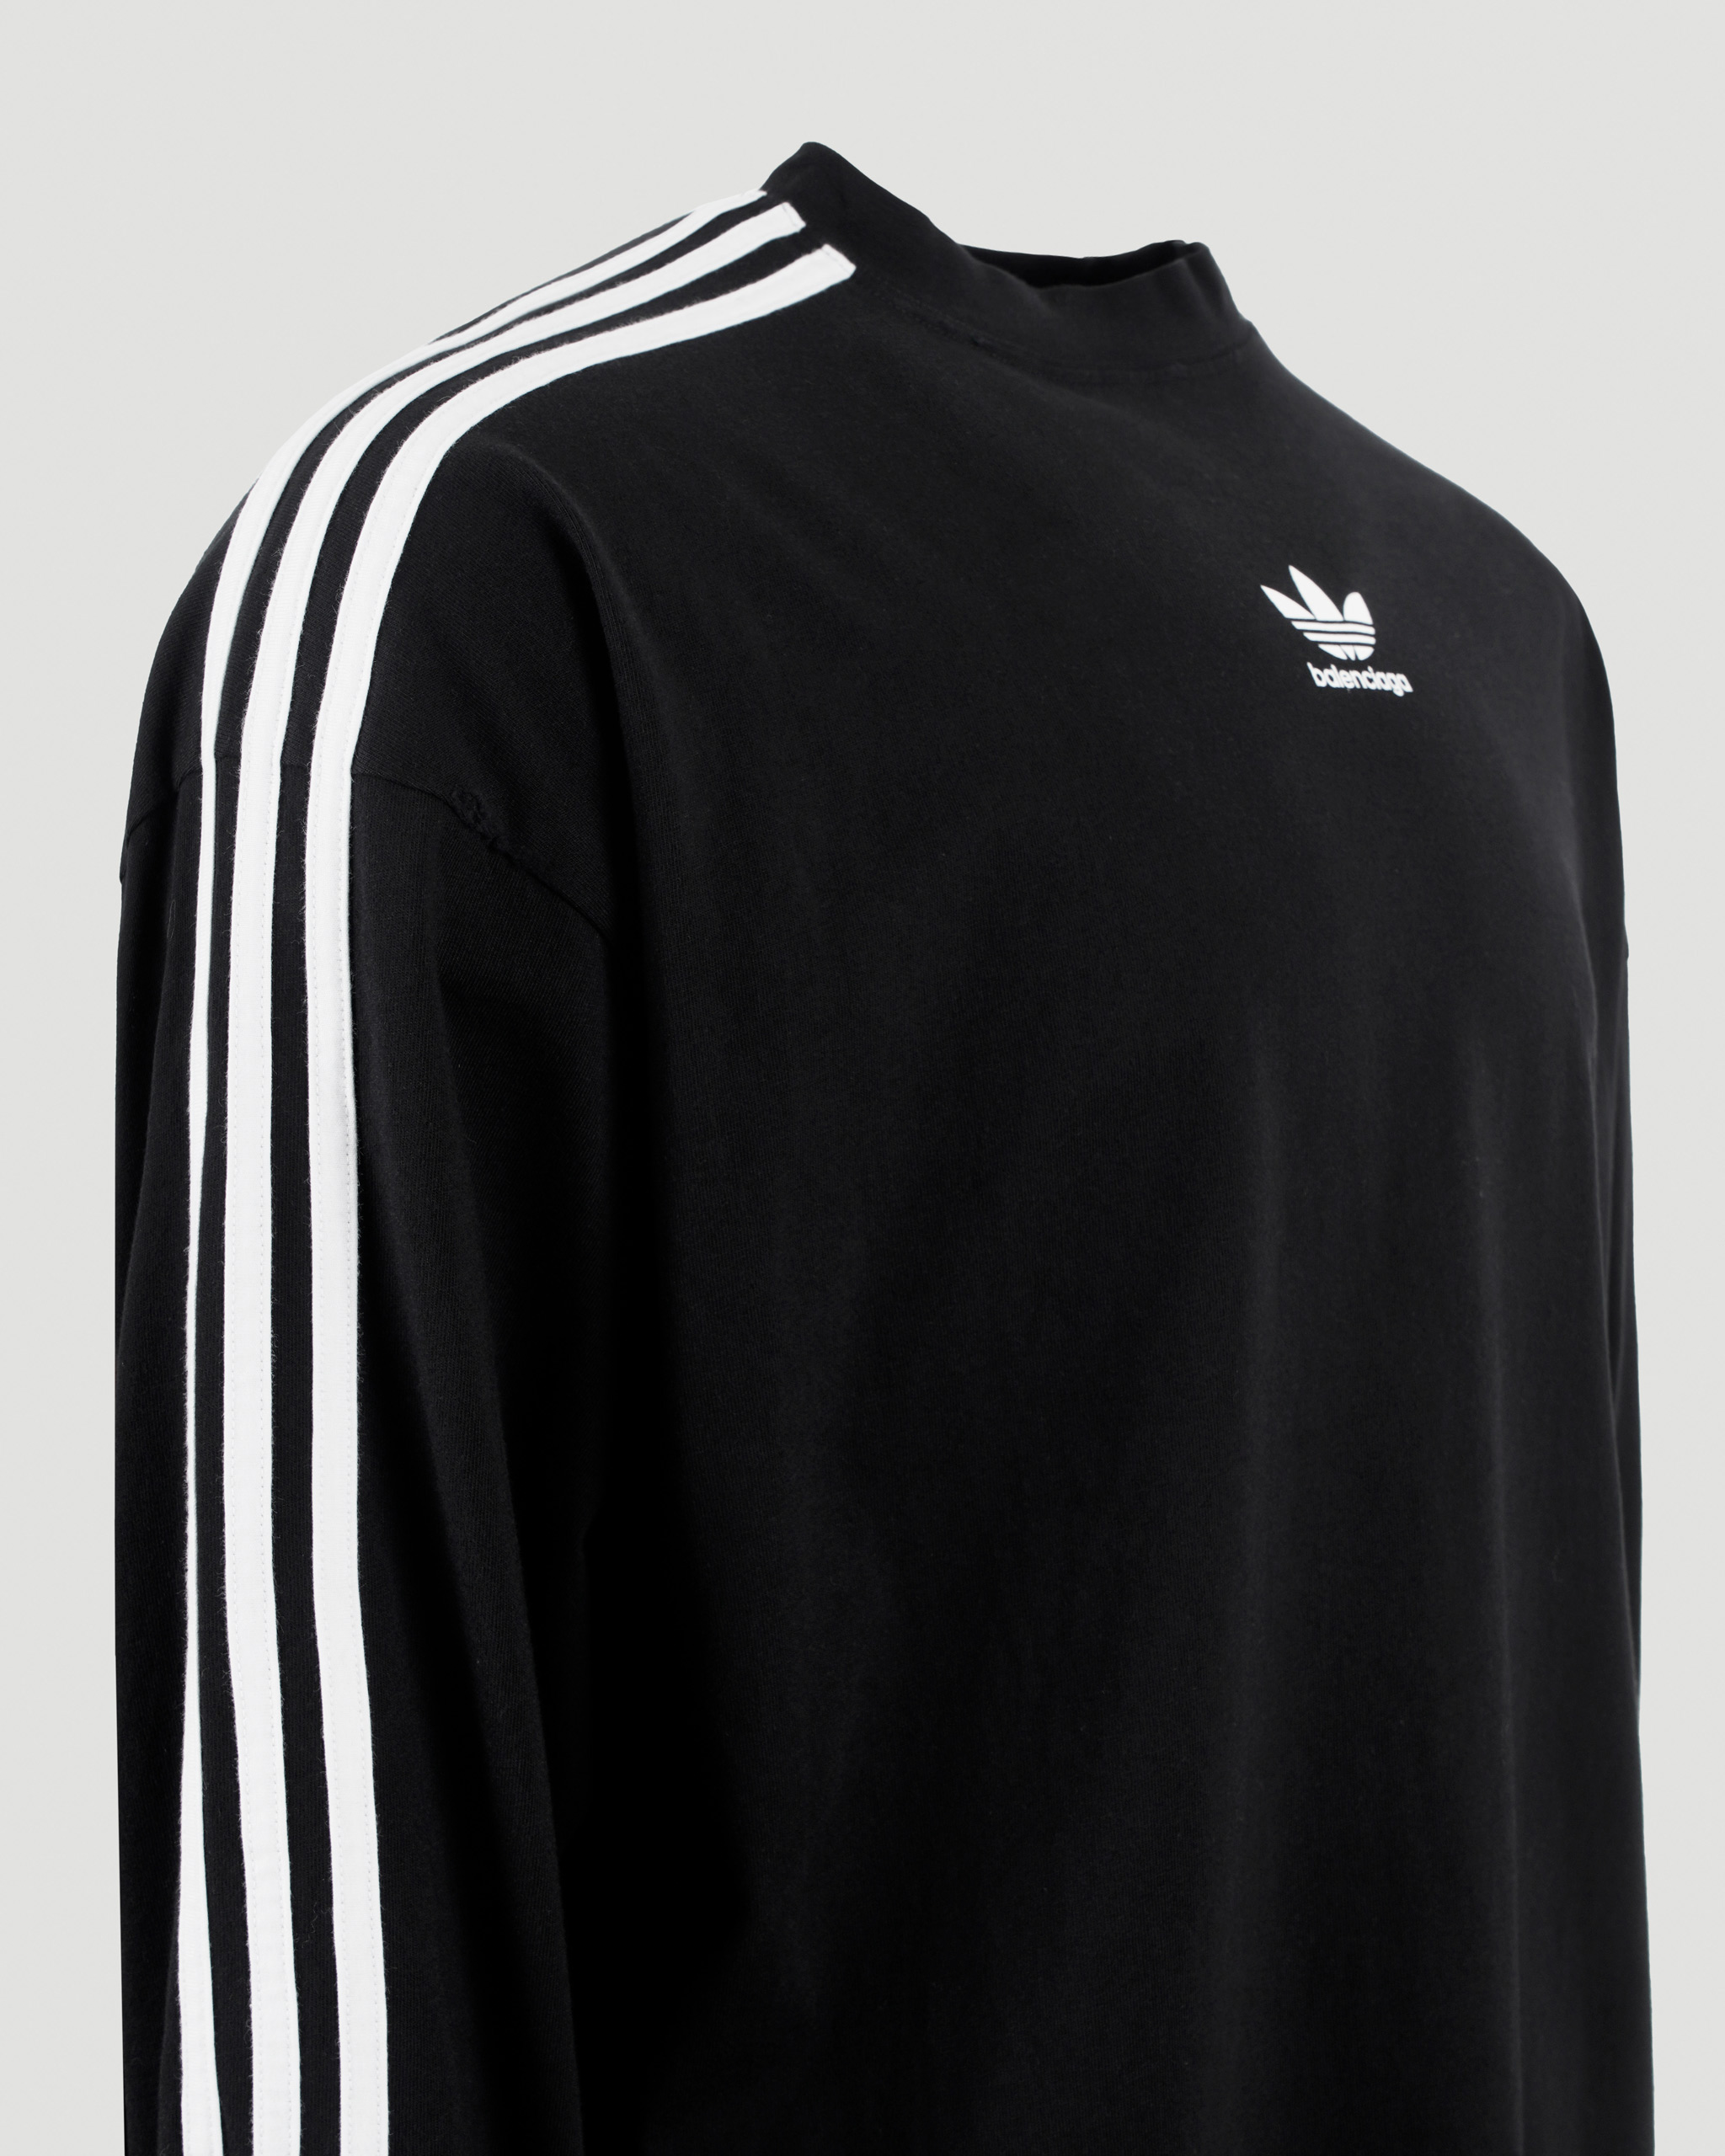 Balenciaga / Adidas - Oversized T-Shirt Black White